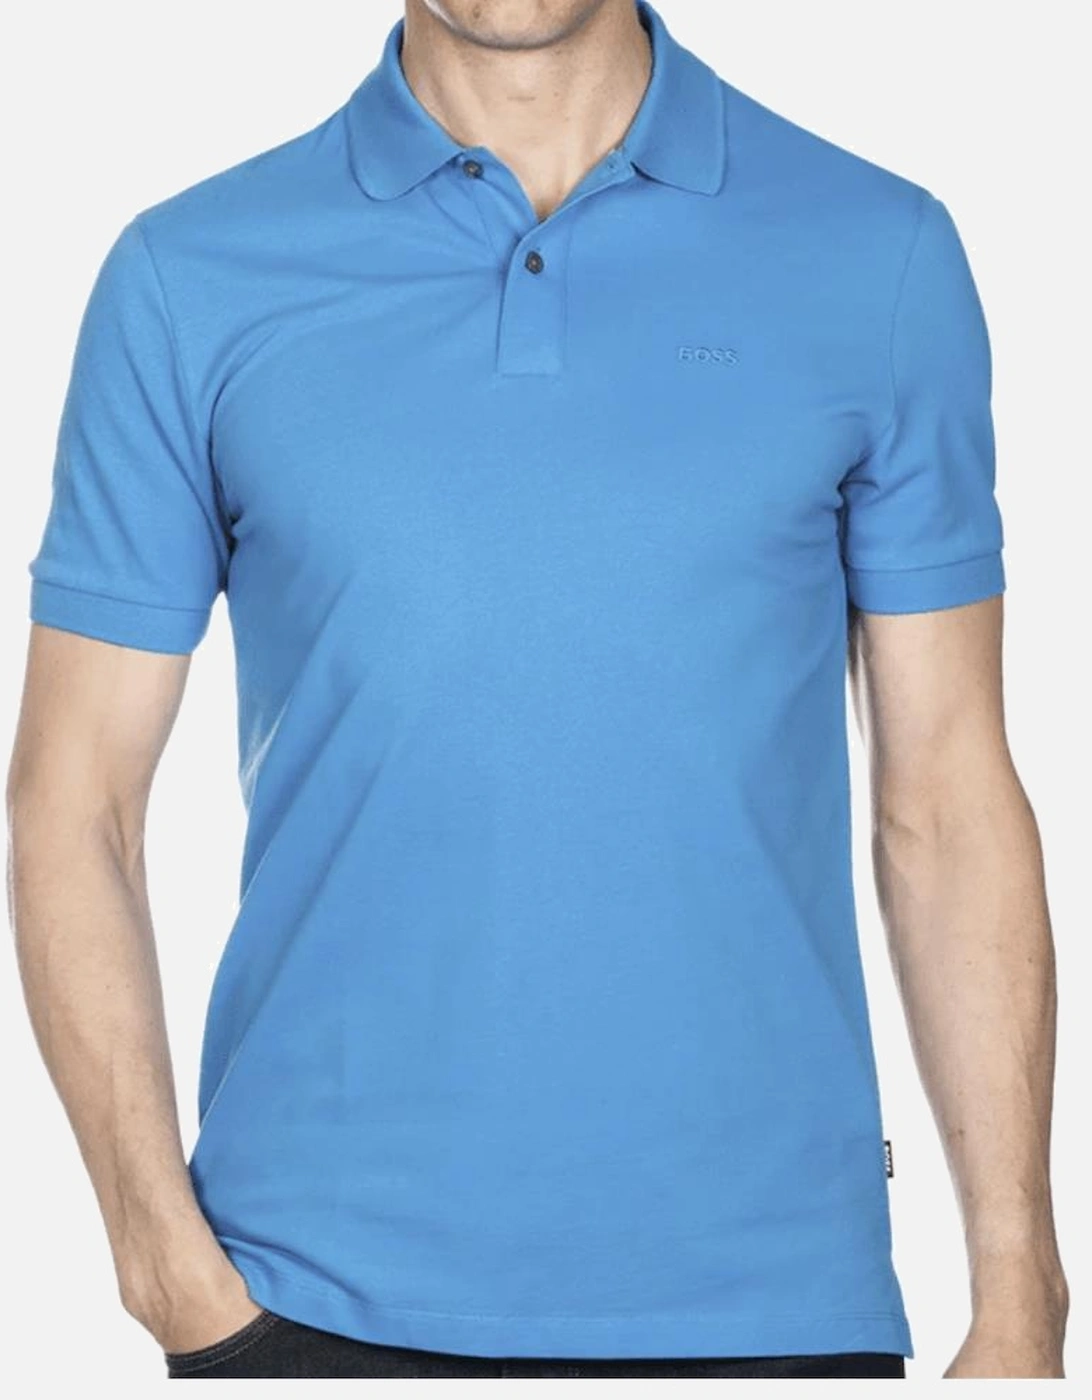 Pallas Cotton Aqua Blue Polo Shirt